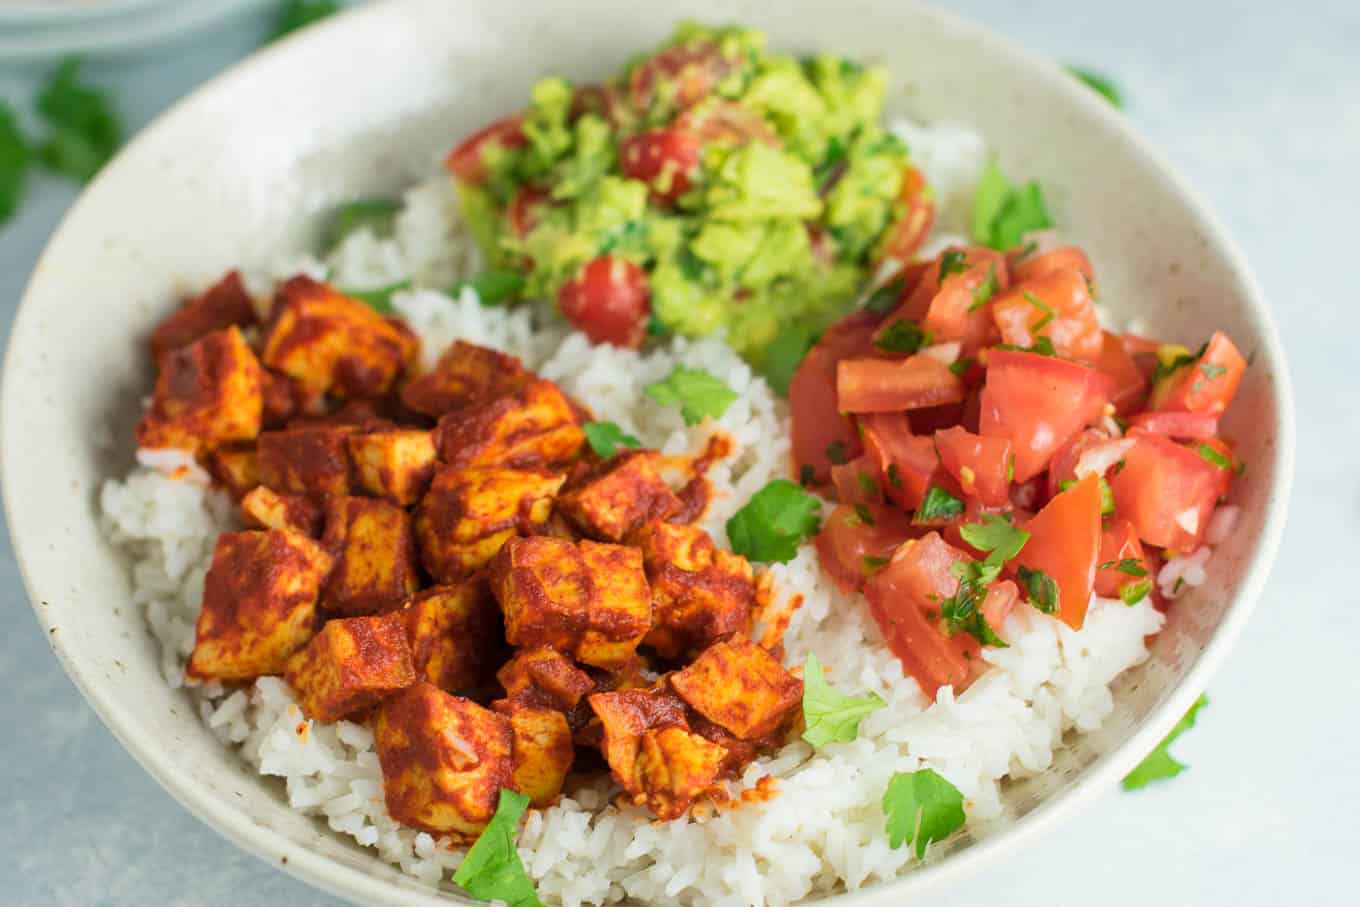 Easy enchilada tofu burrito bowls with homemade guacamole and salsa. Bring chipotle to your kitchen with this delicious recipe! #vegan #burritobowls #tofuburritobowls